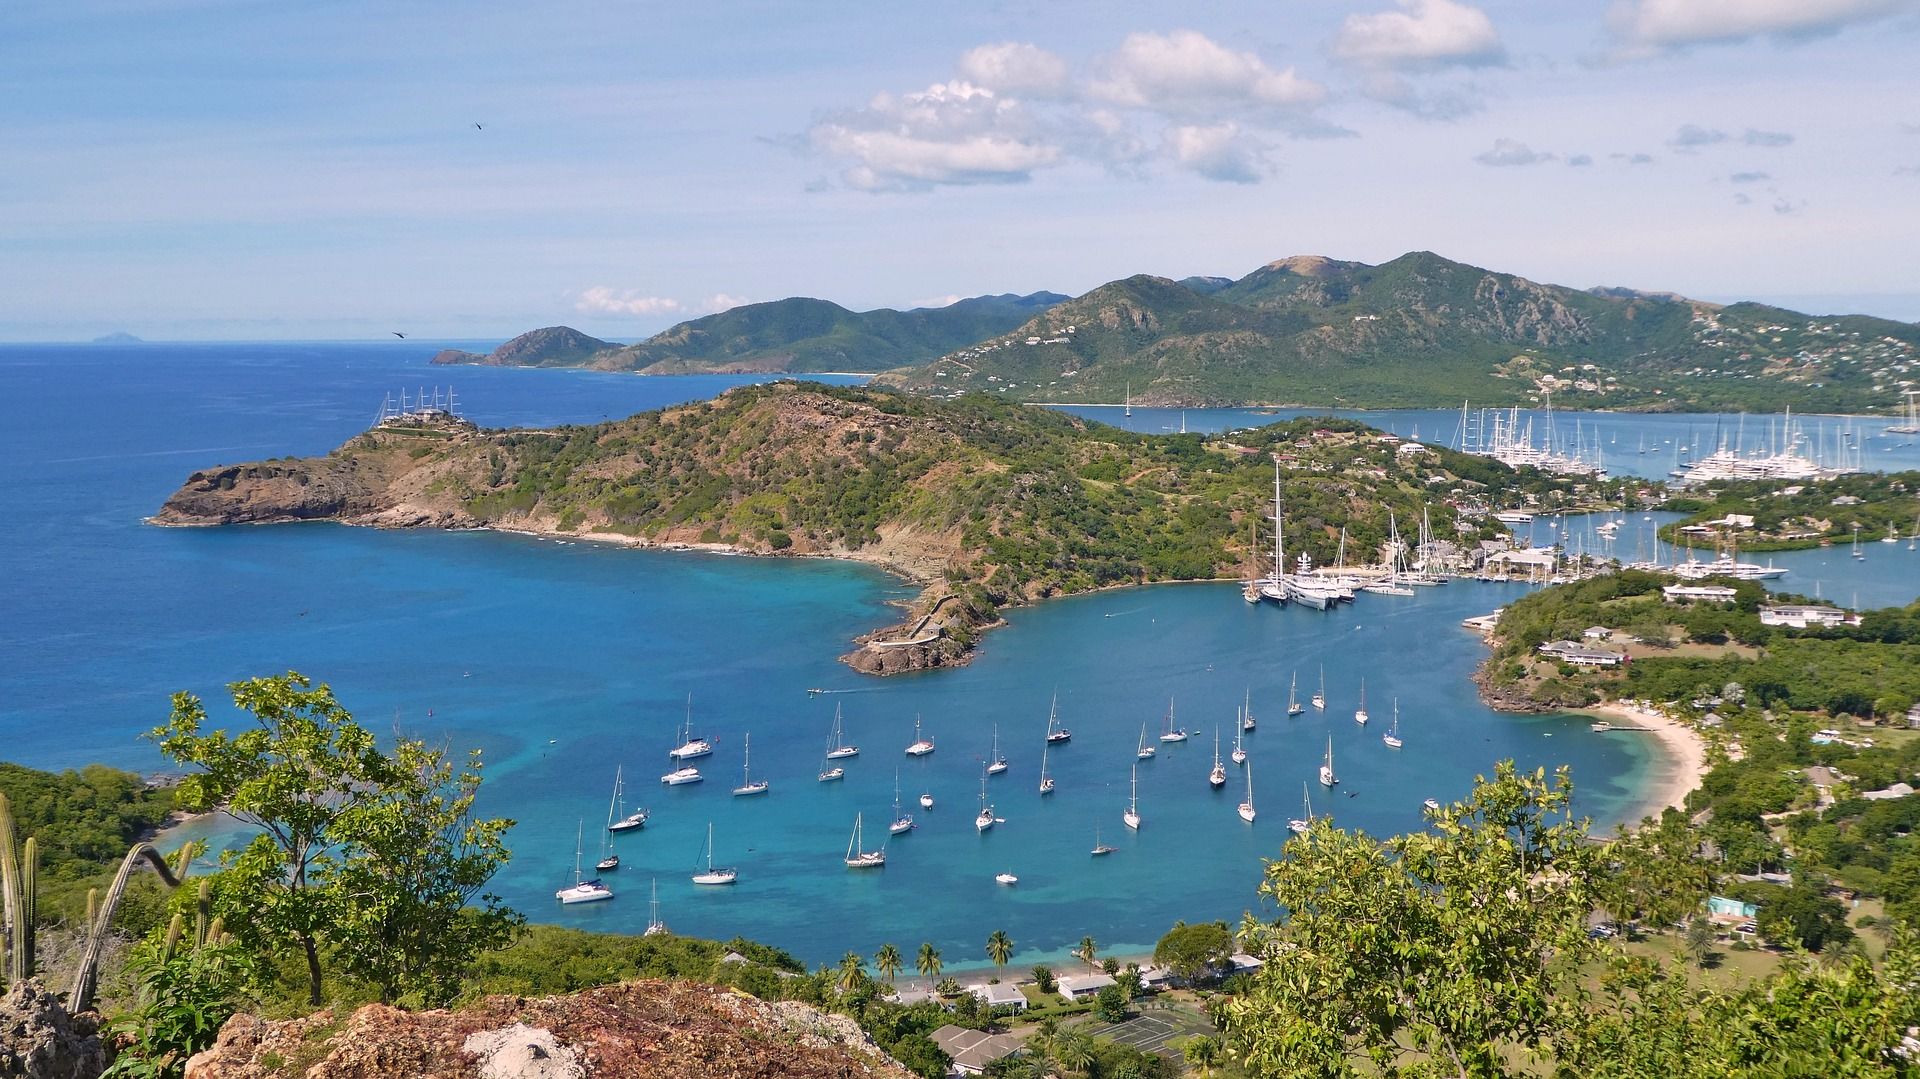 'Antigua and Barbuda Shirley heights lookout